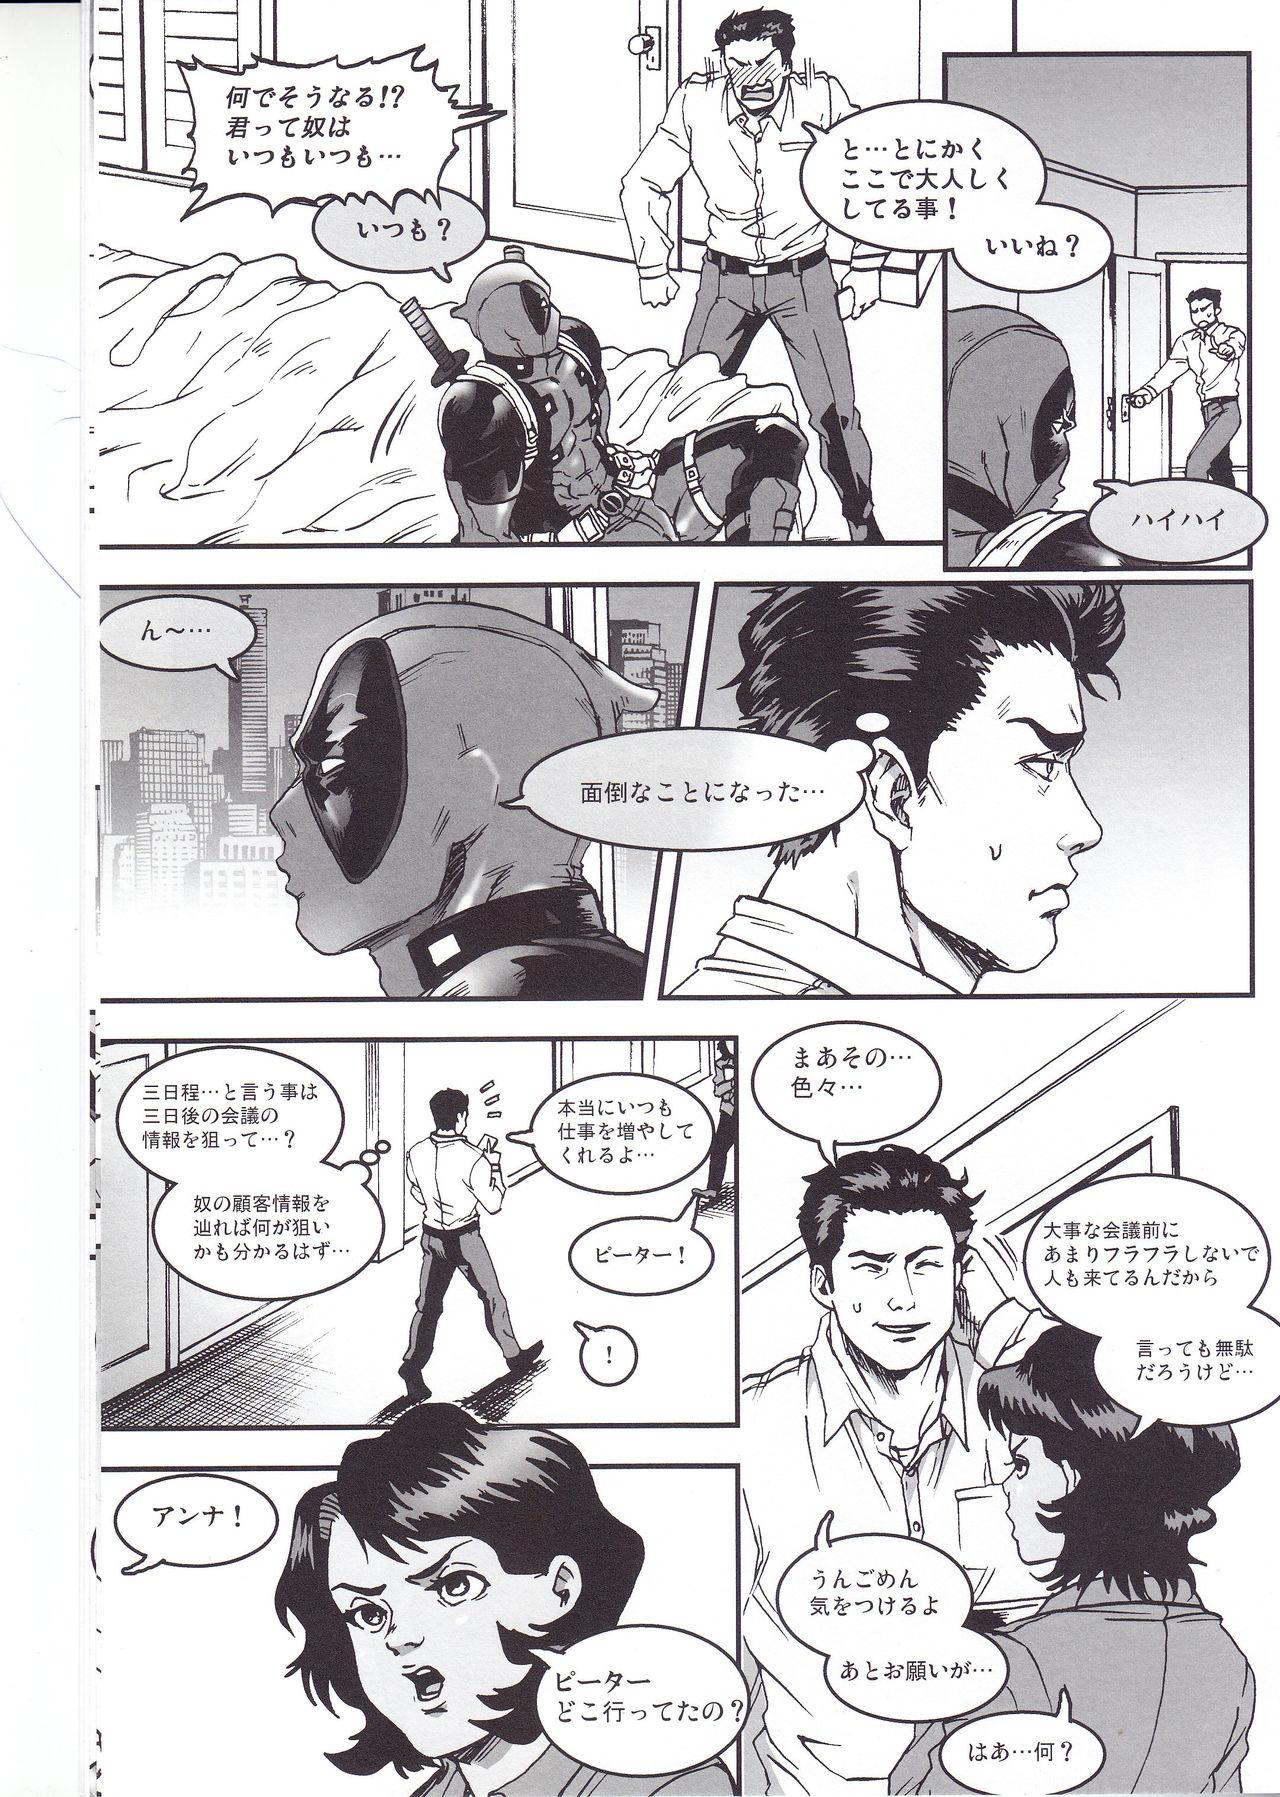 Gagging THREE DAYS 1 - Spider-man Deadpool Bailando - Page 9